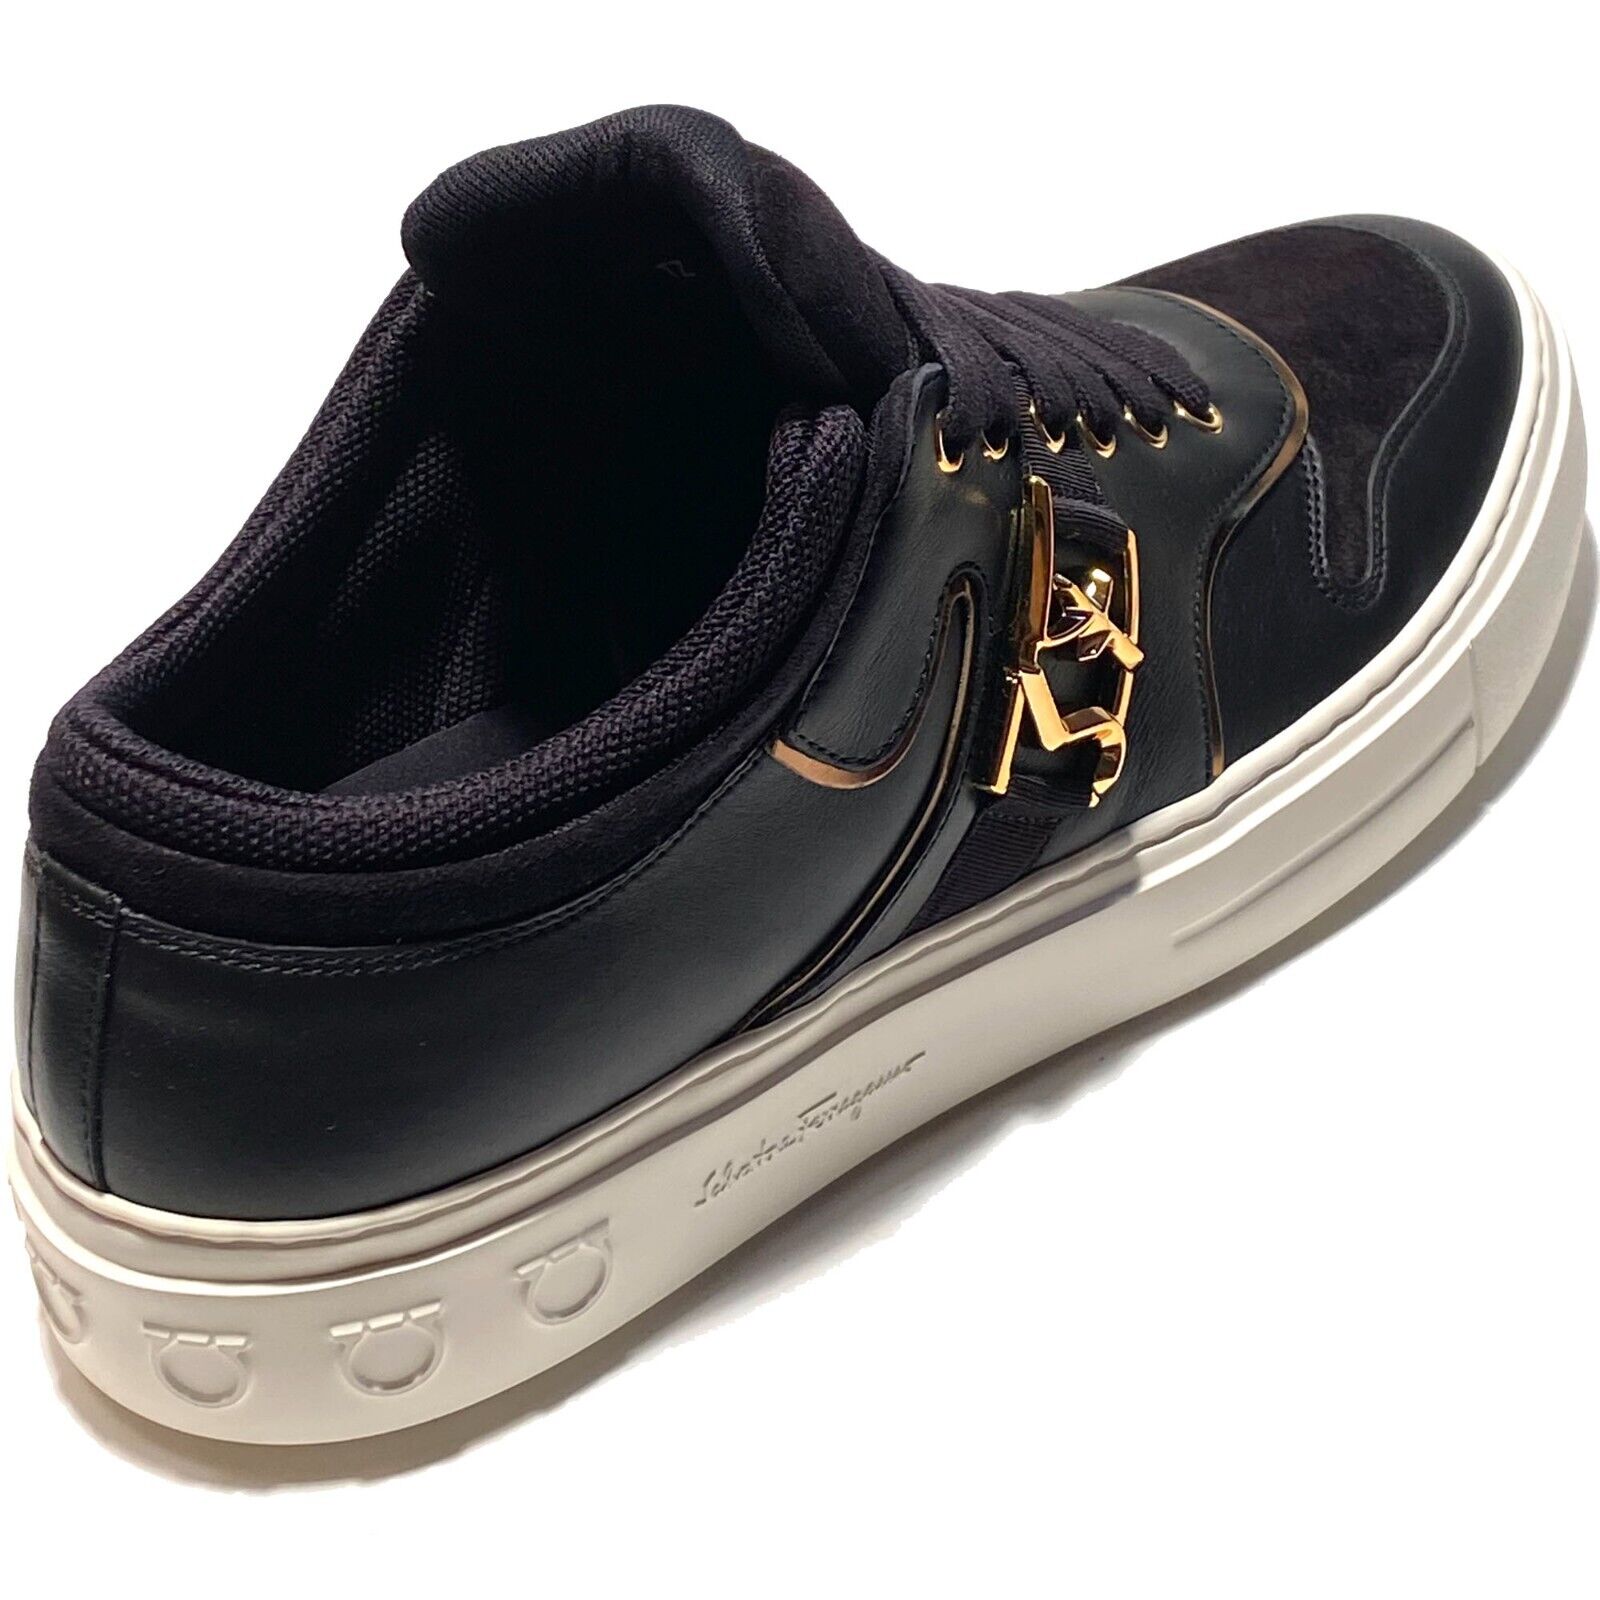 Pre-owned Ferragamo Noris Black Leather Suede Men's Low-top Sneakers Lace-up Luxury Shoes